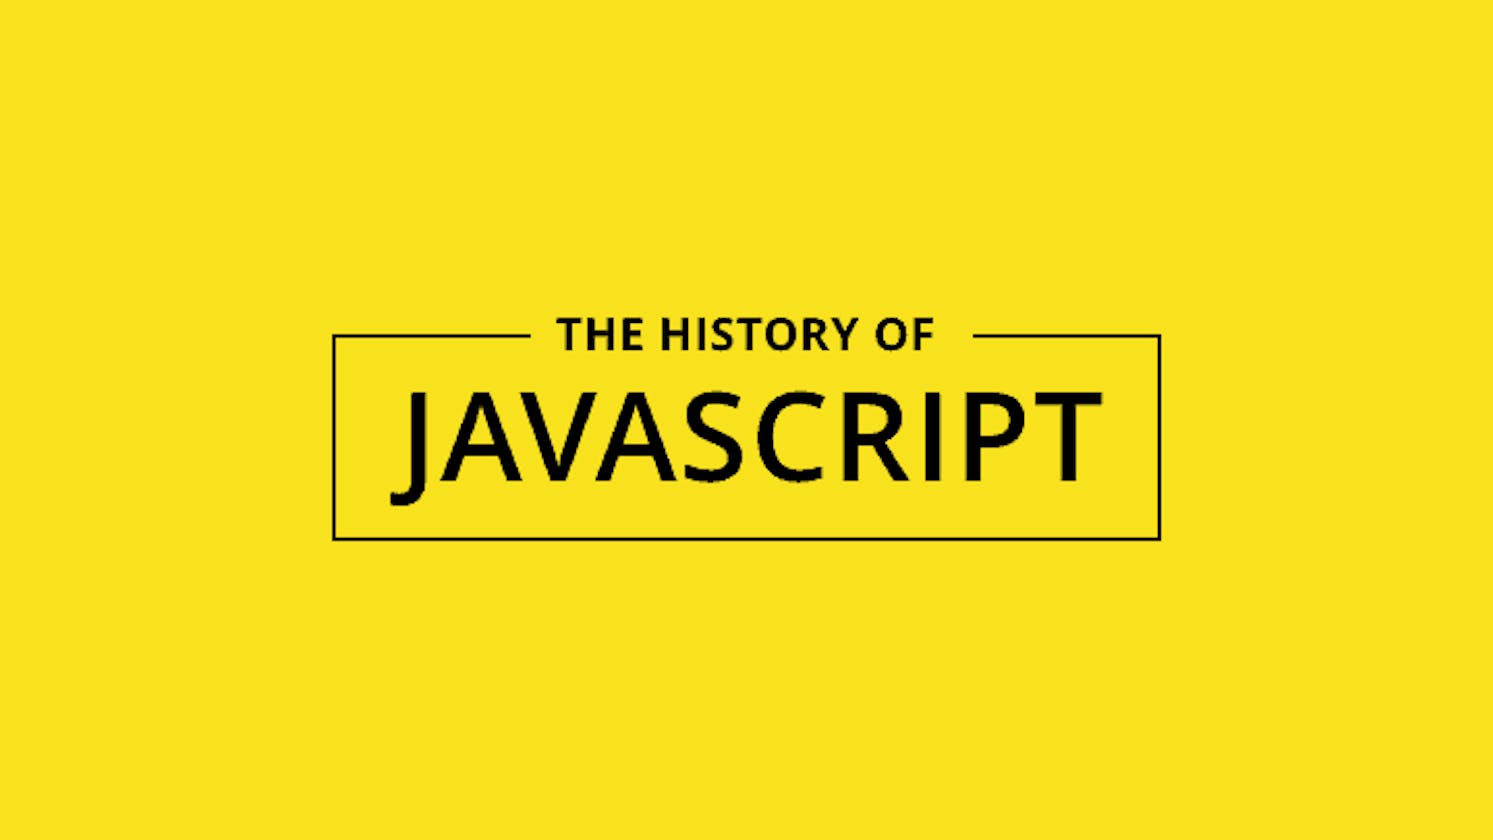 Brief History of JavaScript